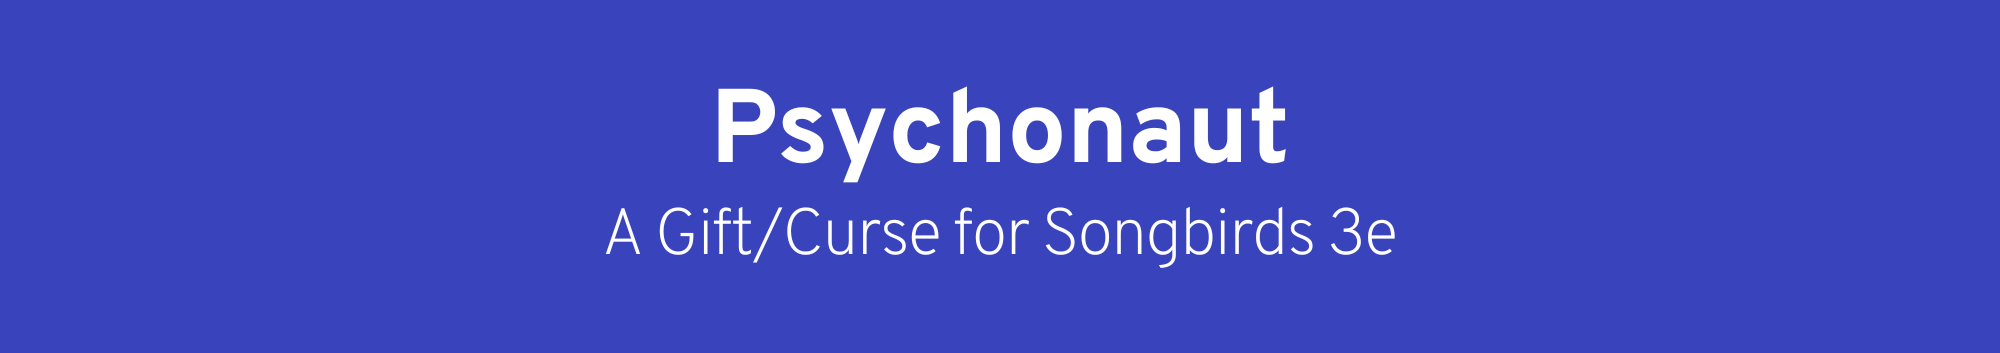 Psychonaut: A Songbirds Gift/Curse